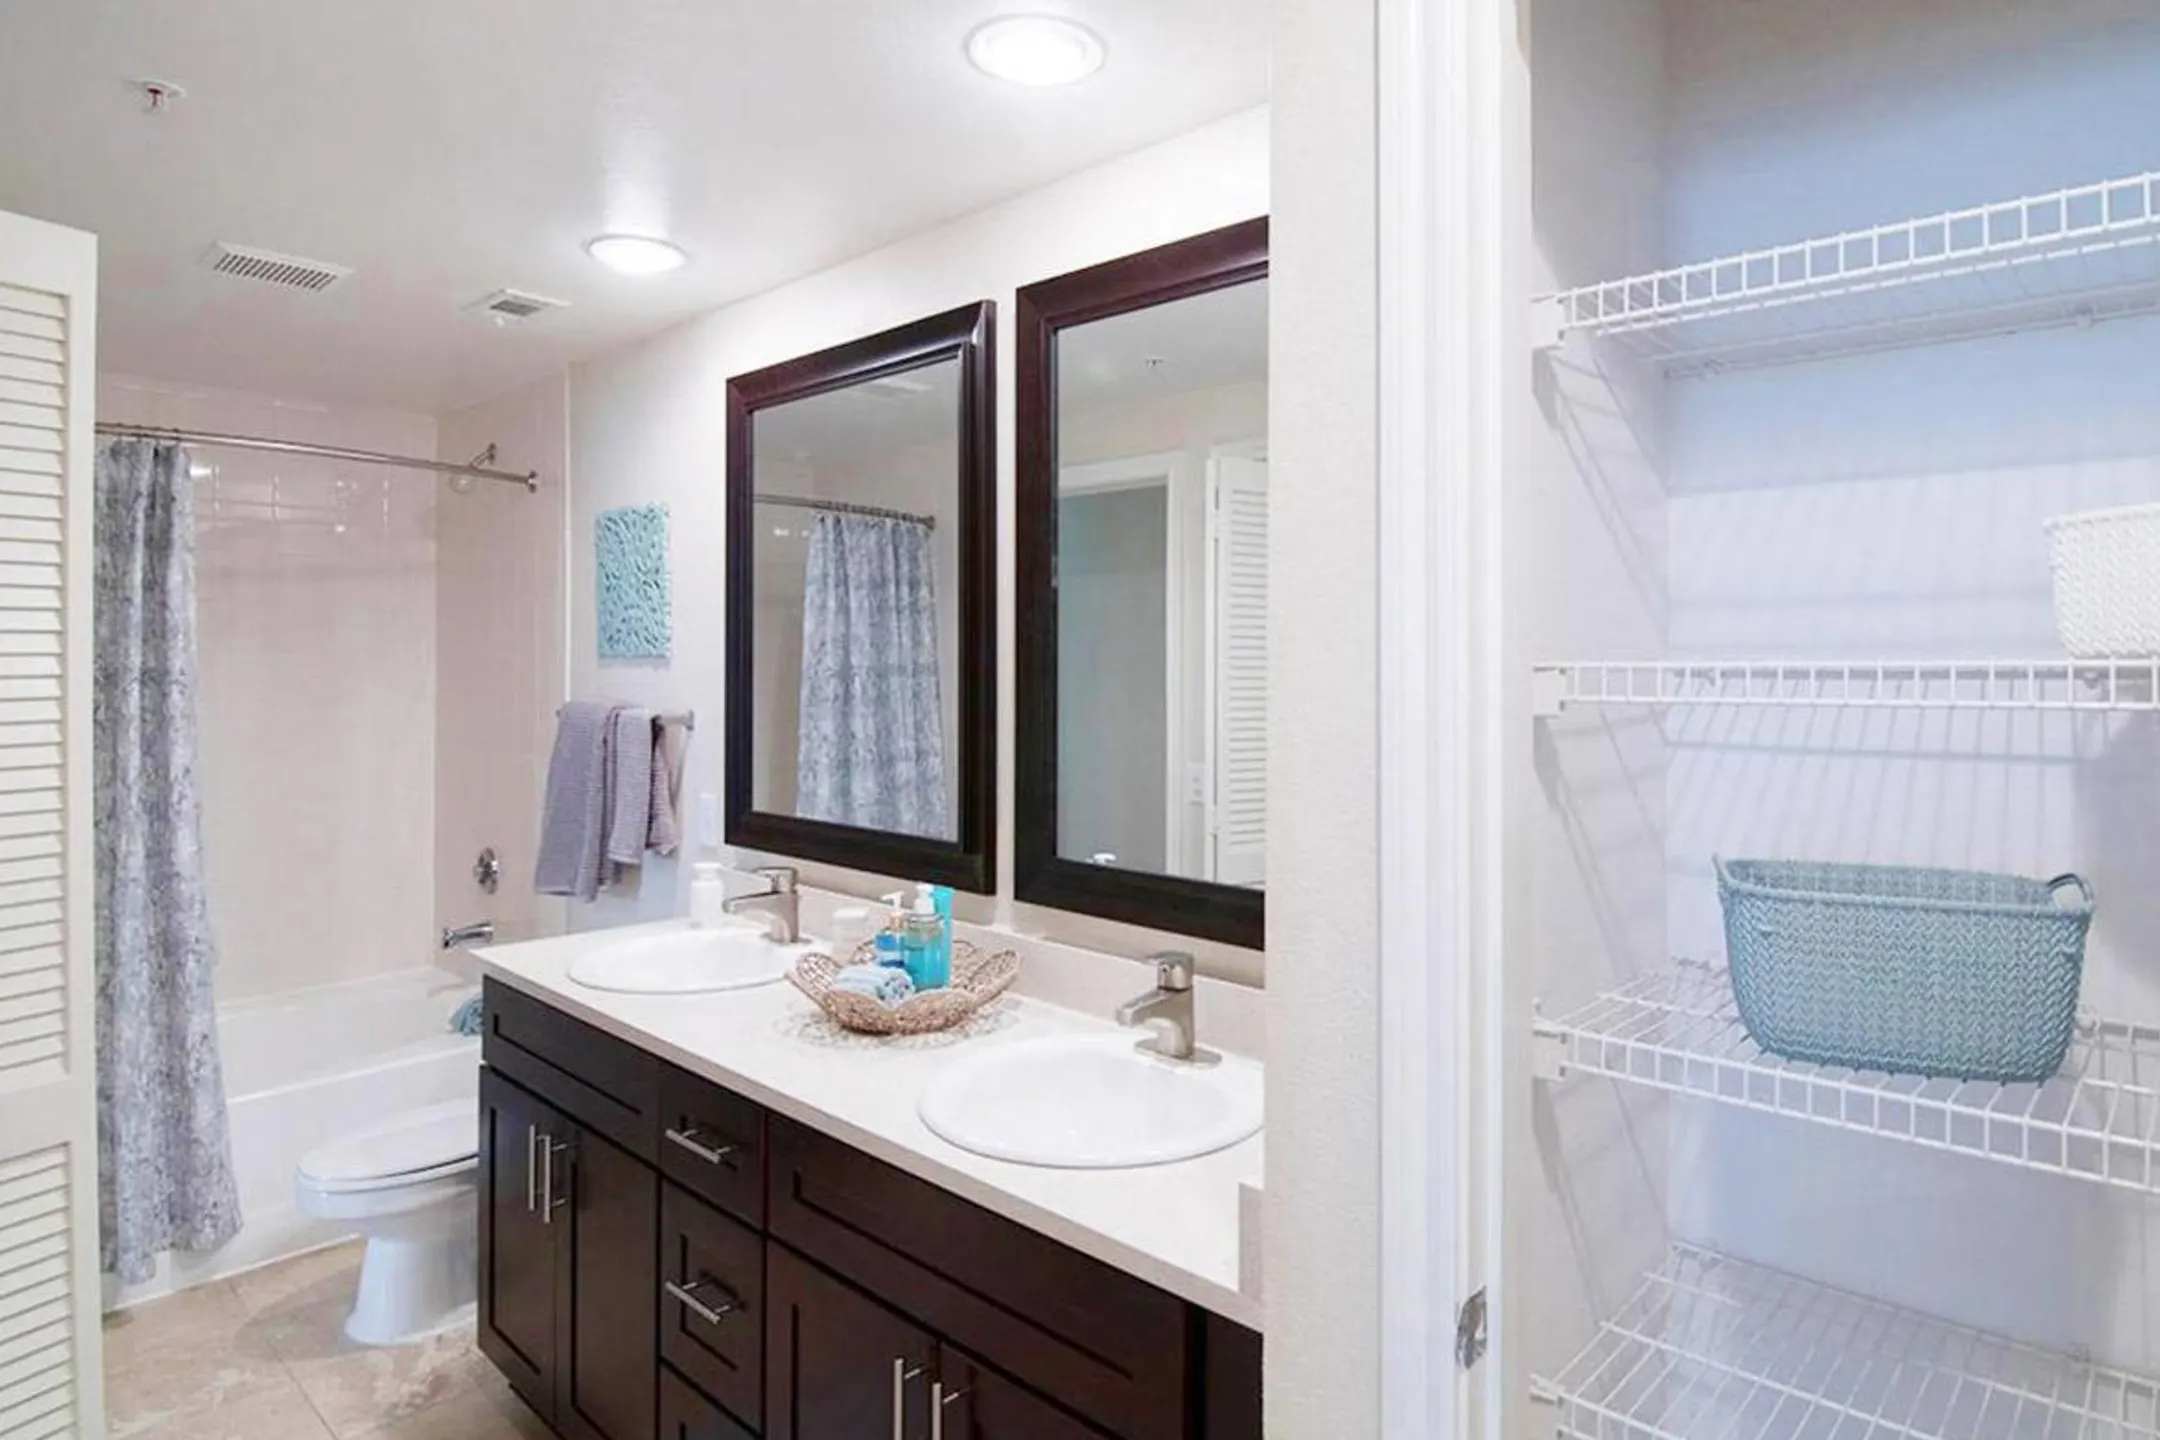 Bathroom - 77081 Luxury Properties - Houston, TX